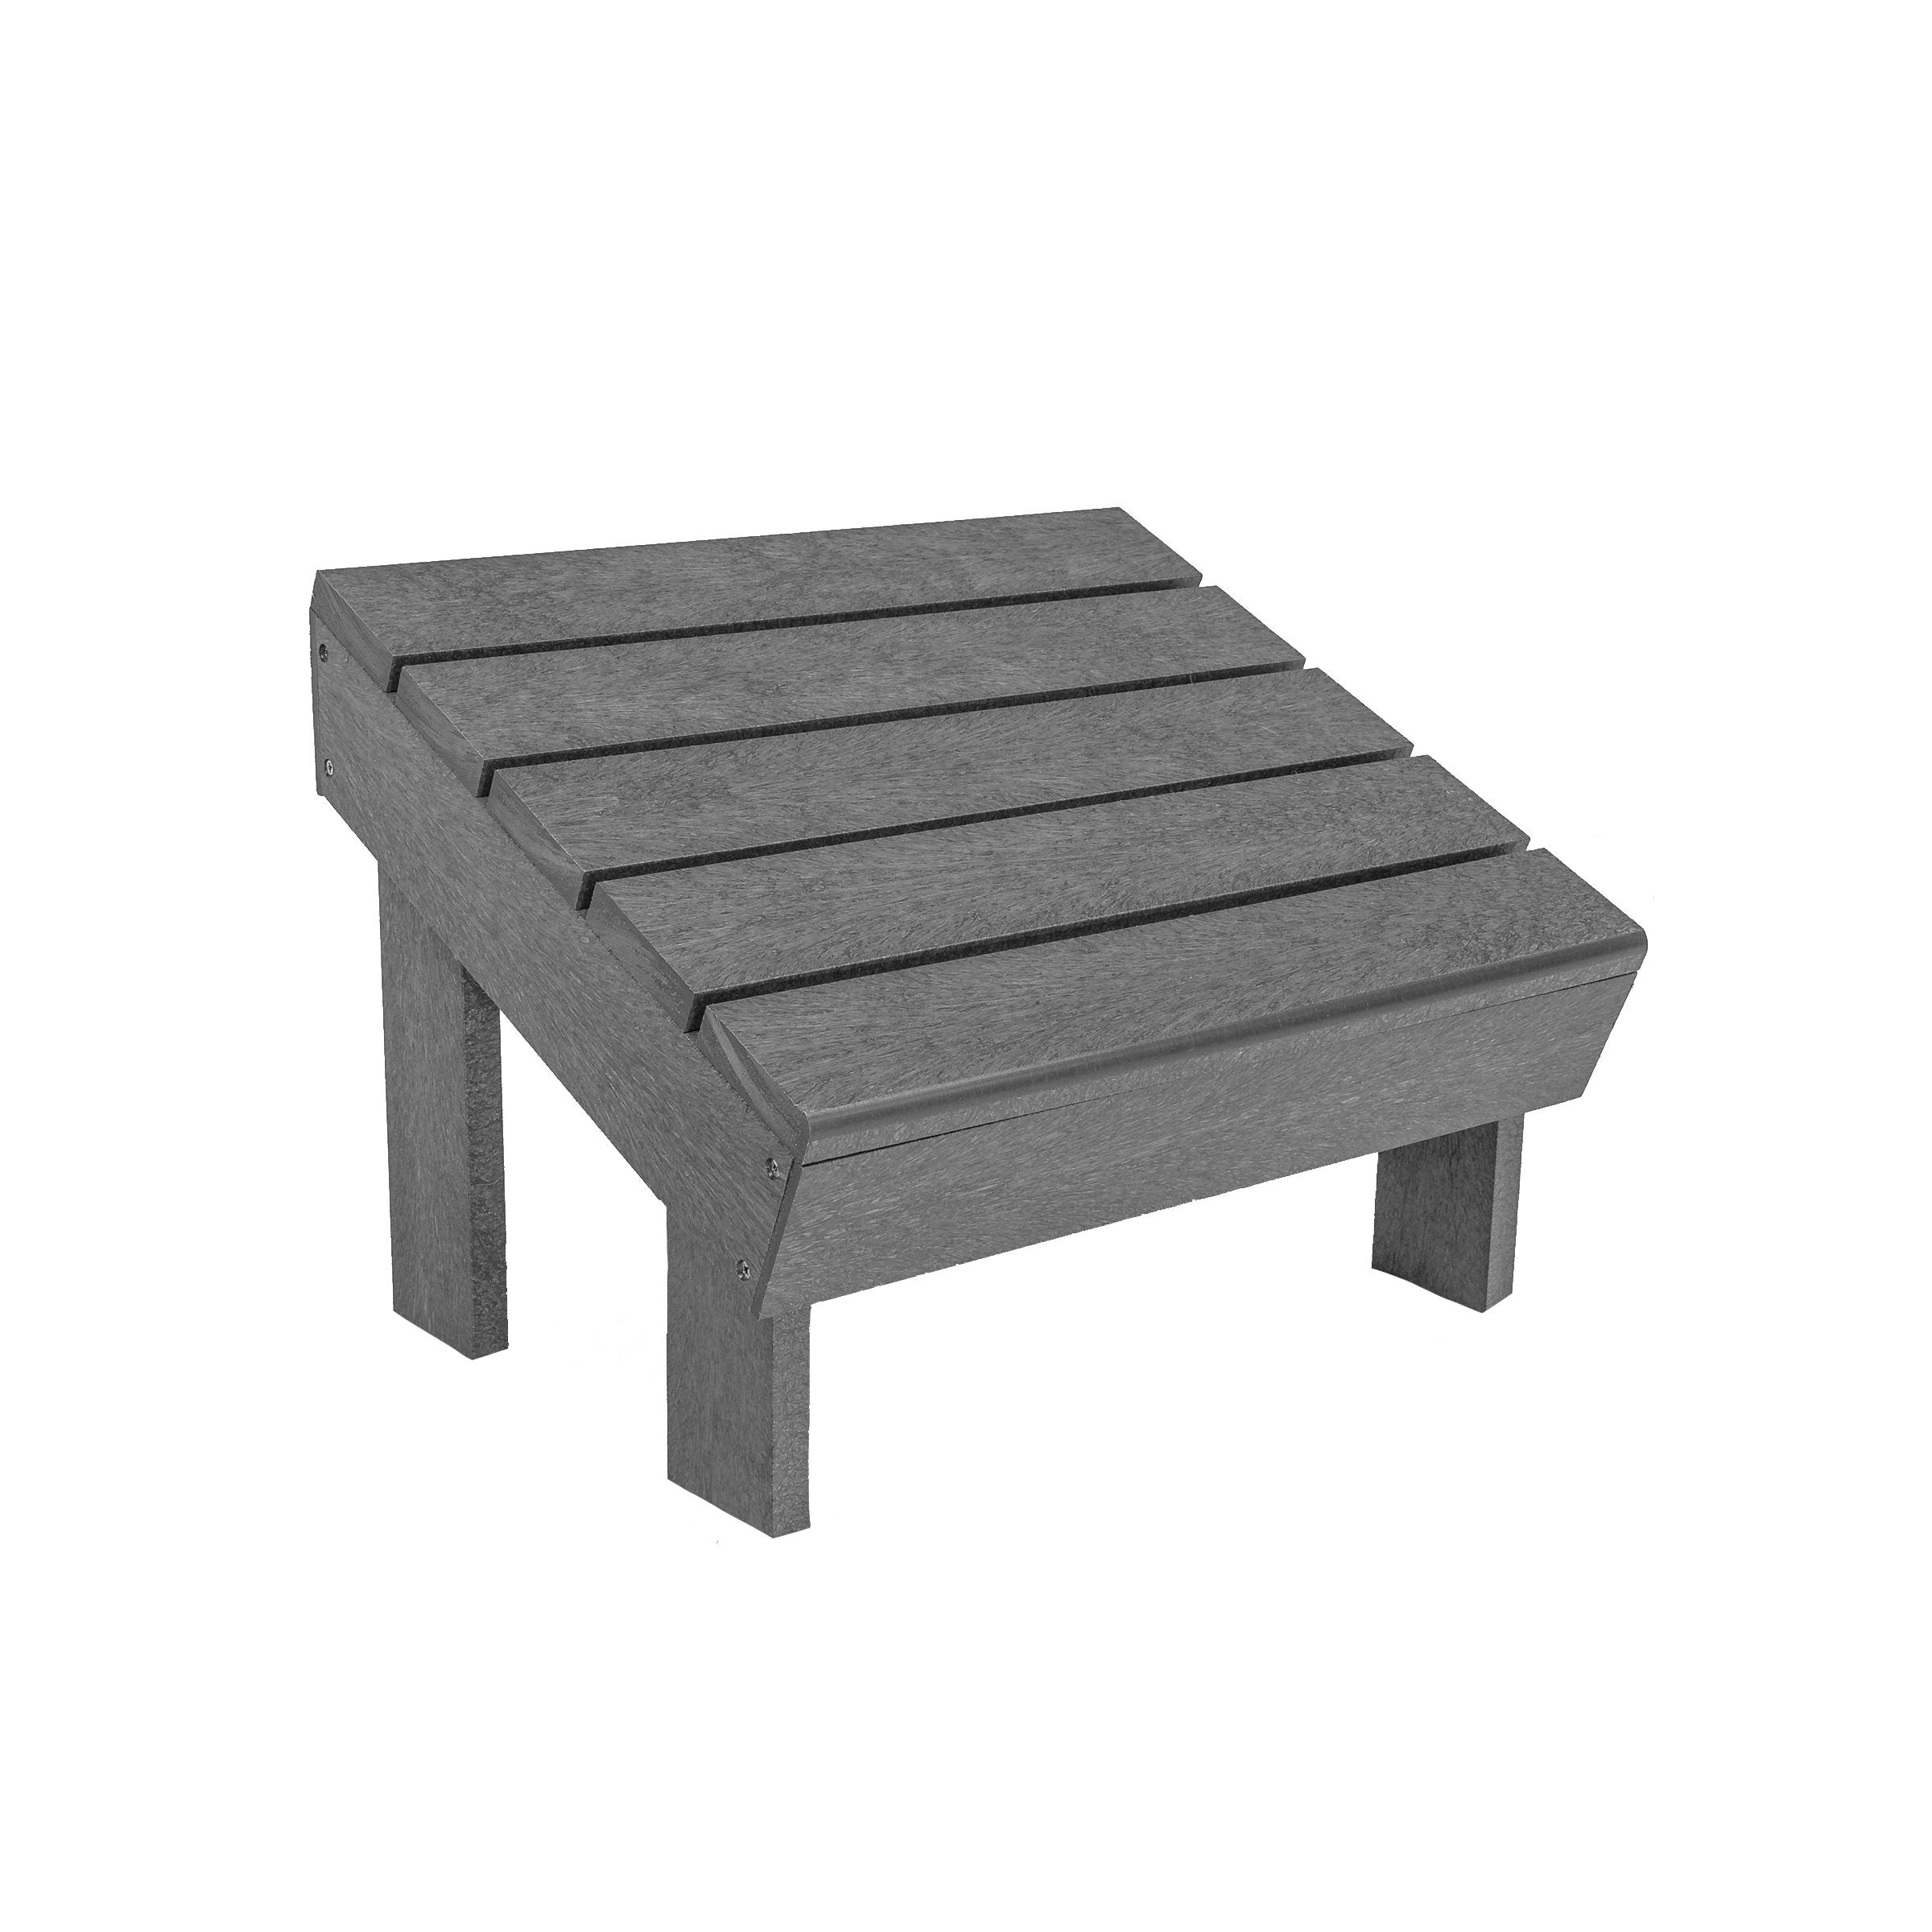 C.R. Plastic Products Modern Footstool Slate Grey 12041304